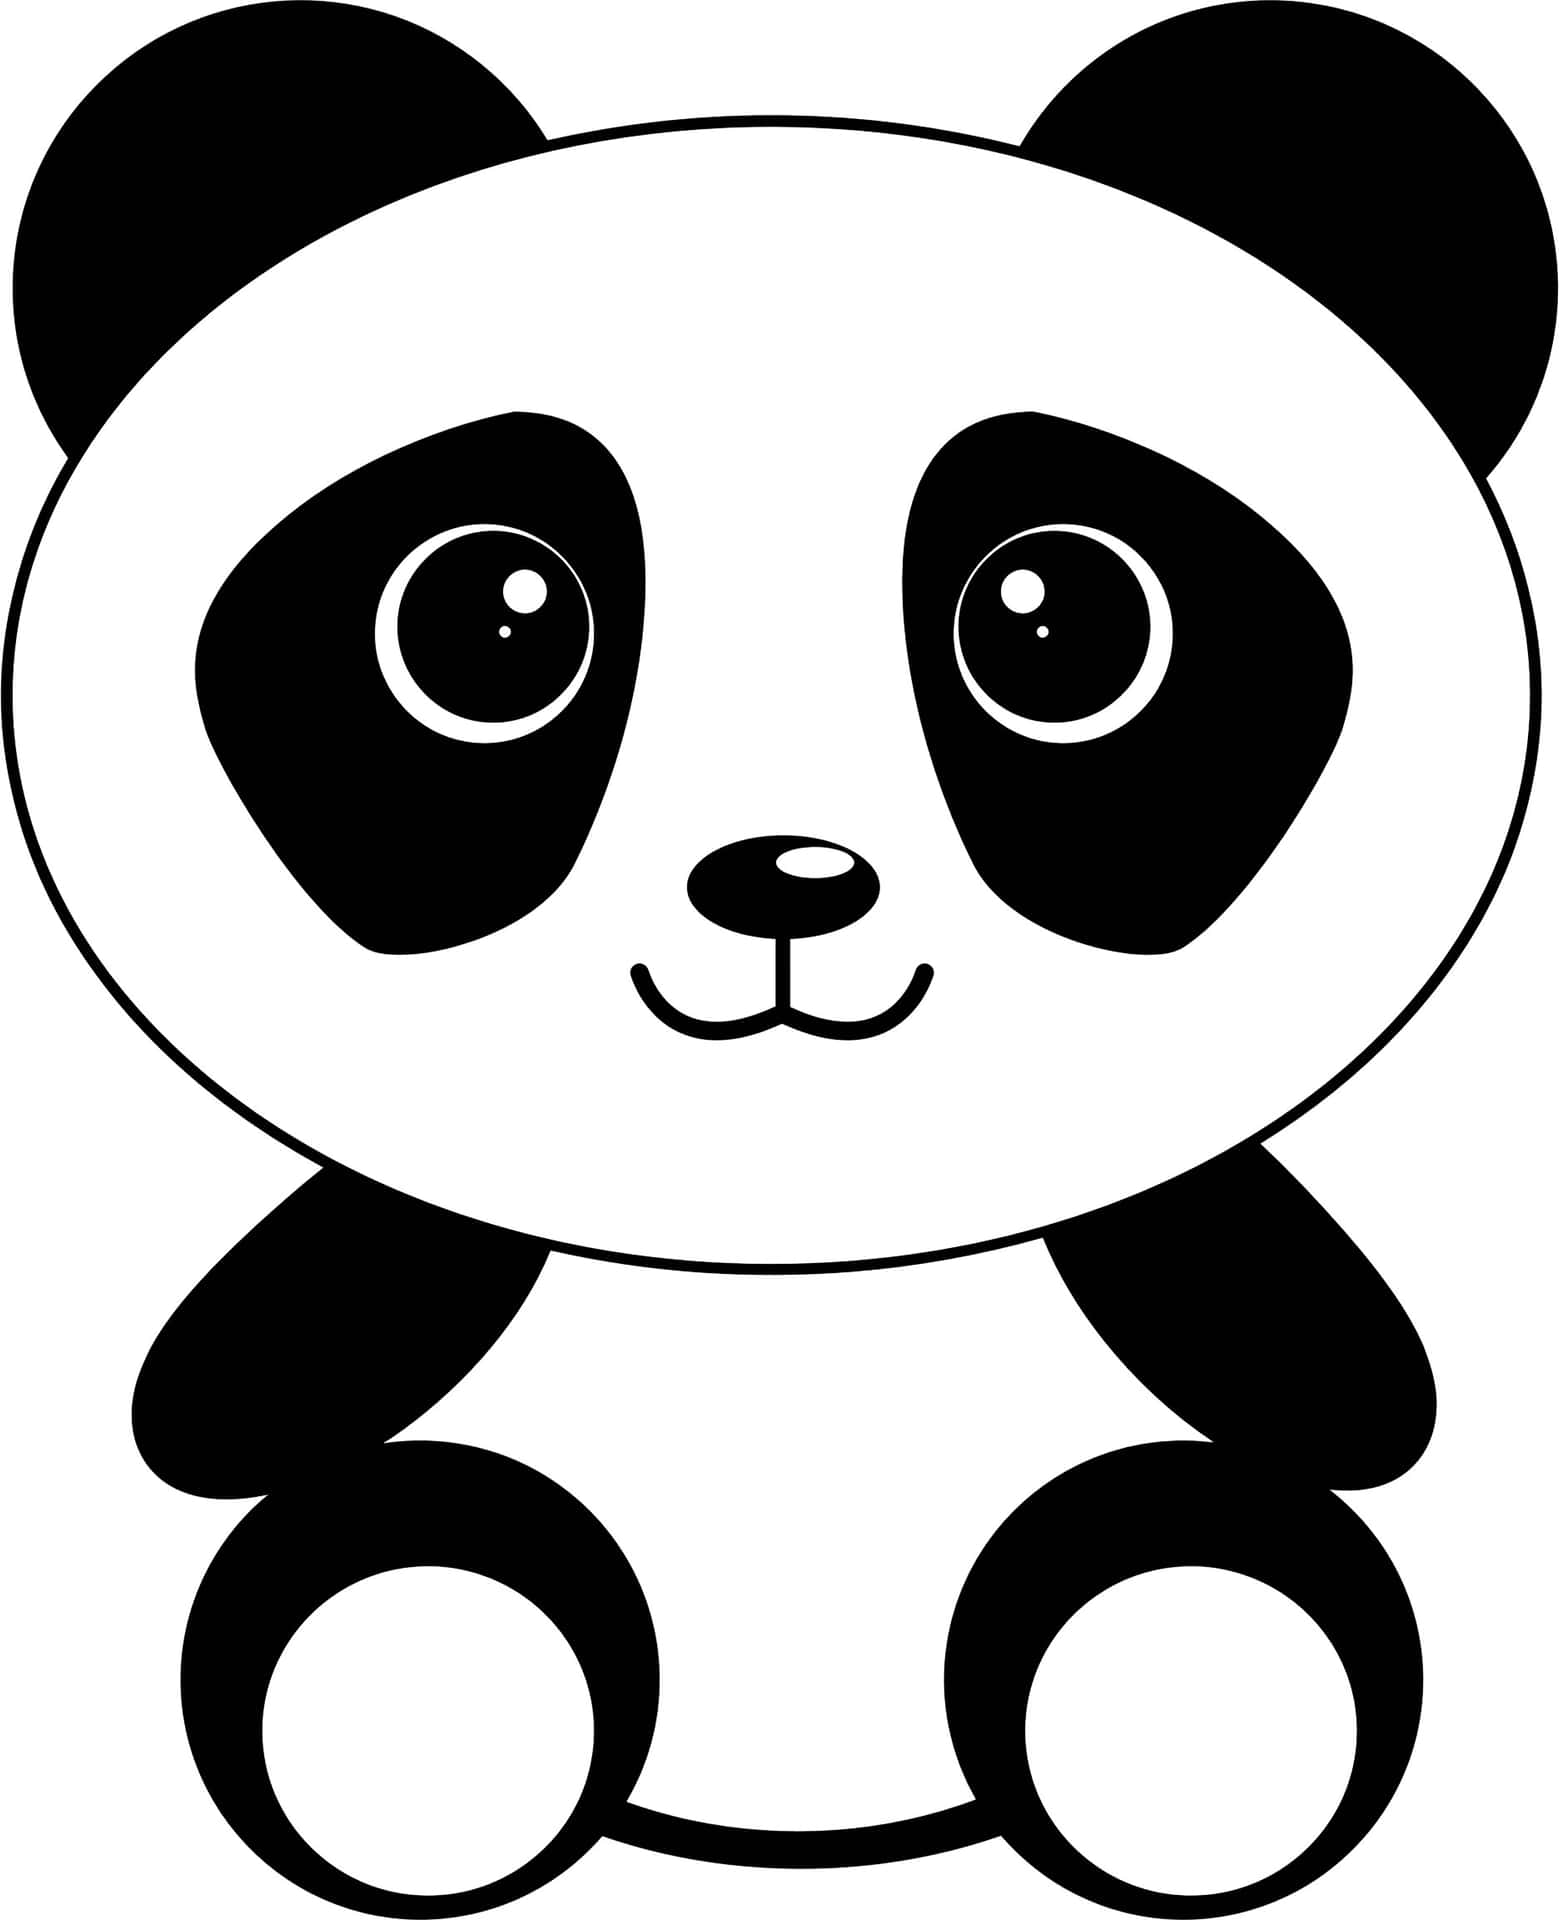 Plain Black White Cute Cartoon Panda Background